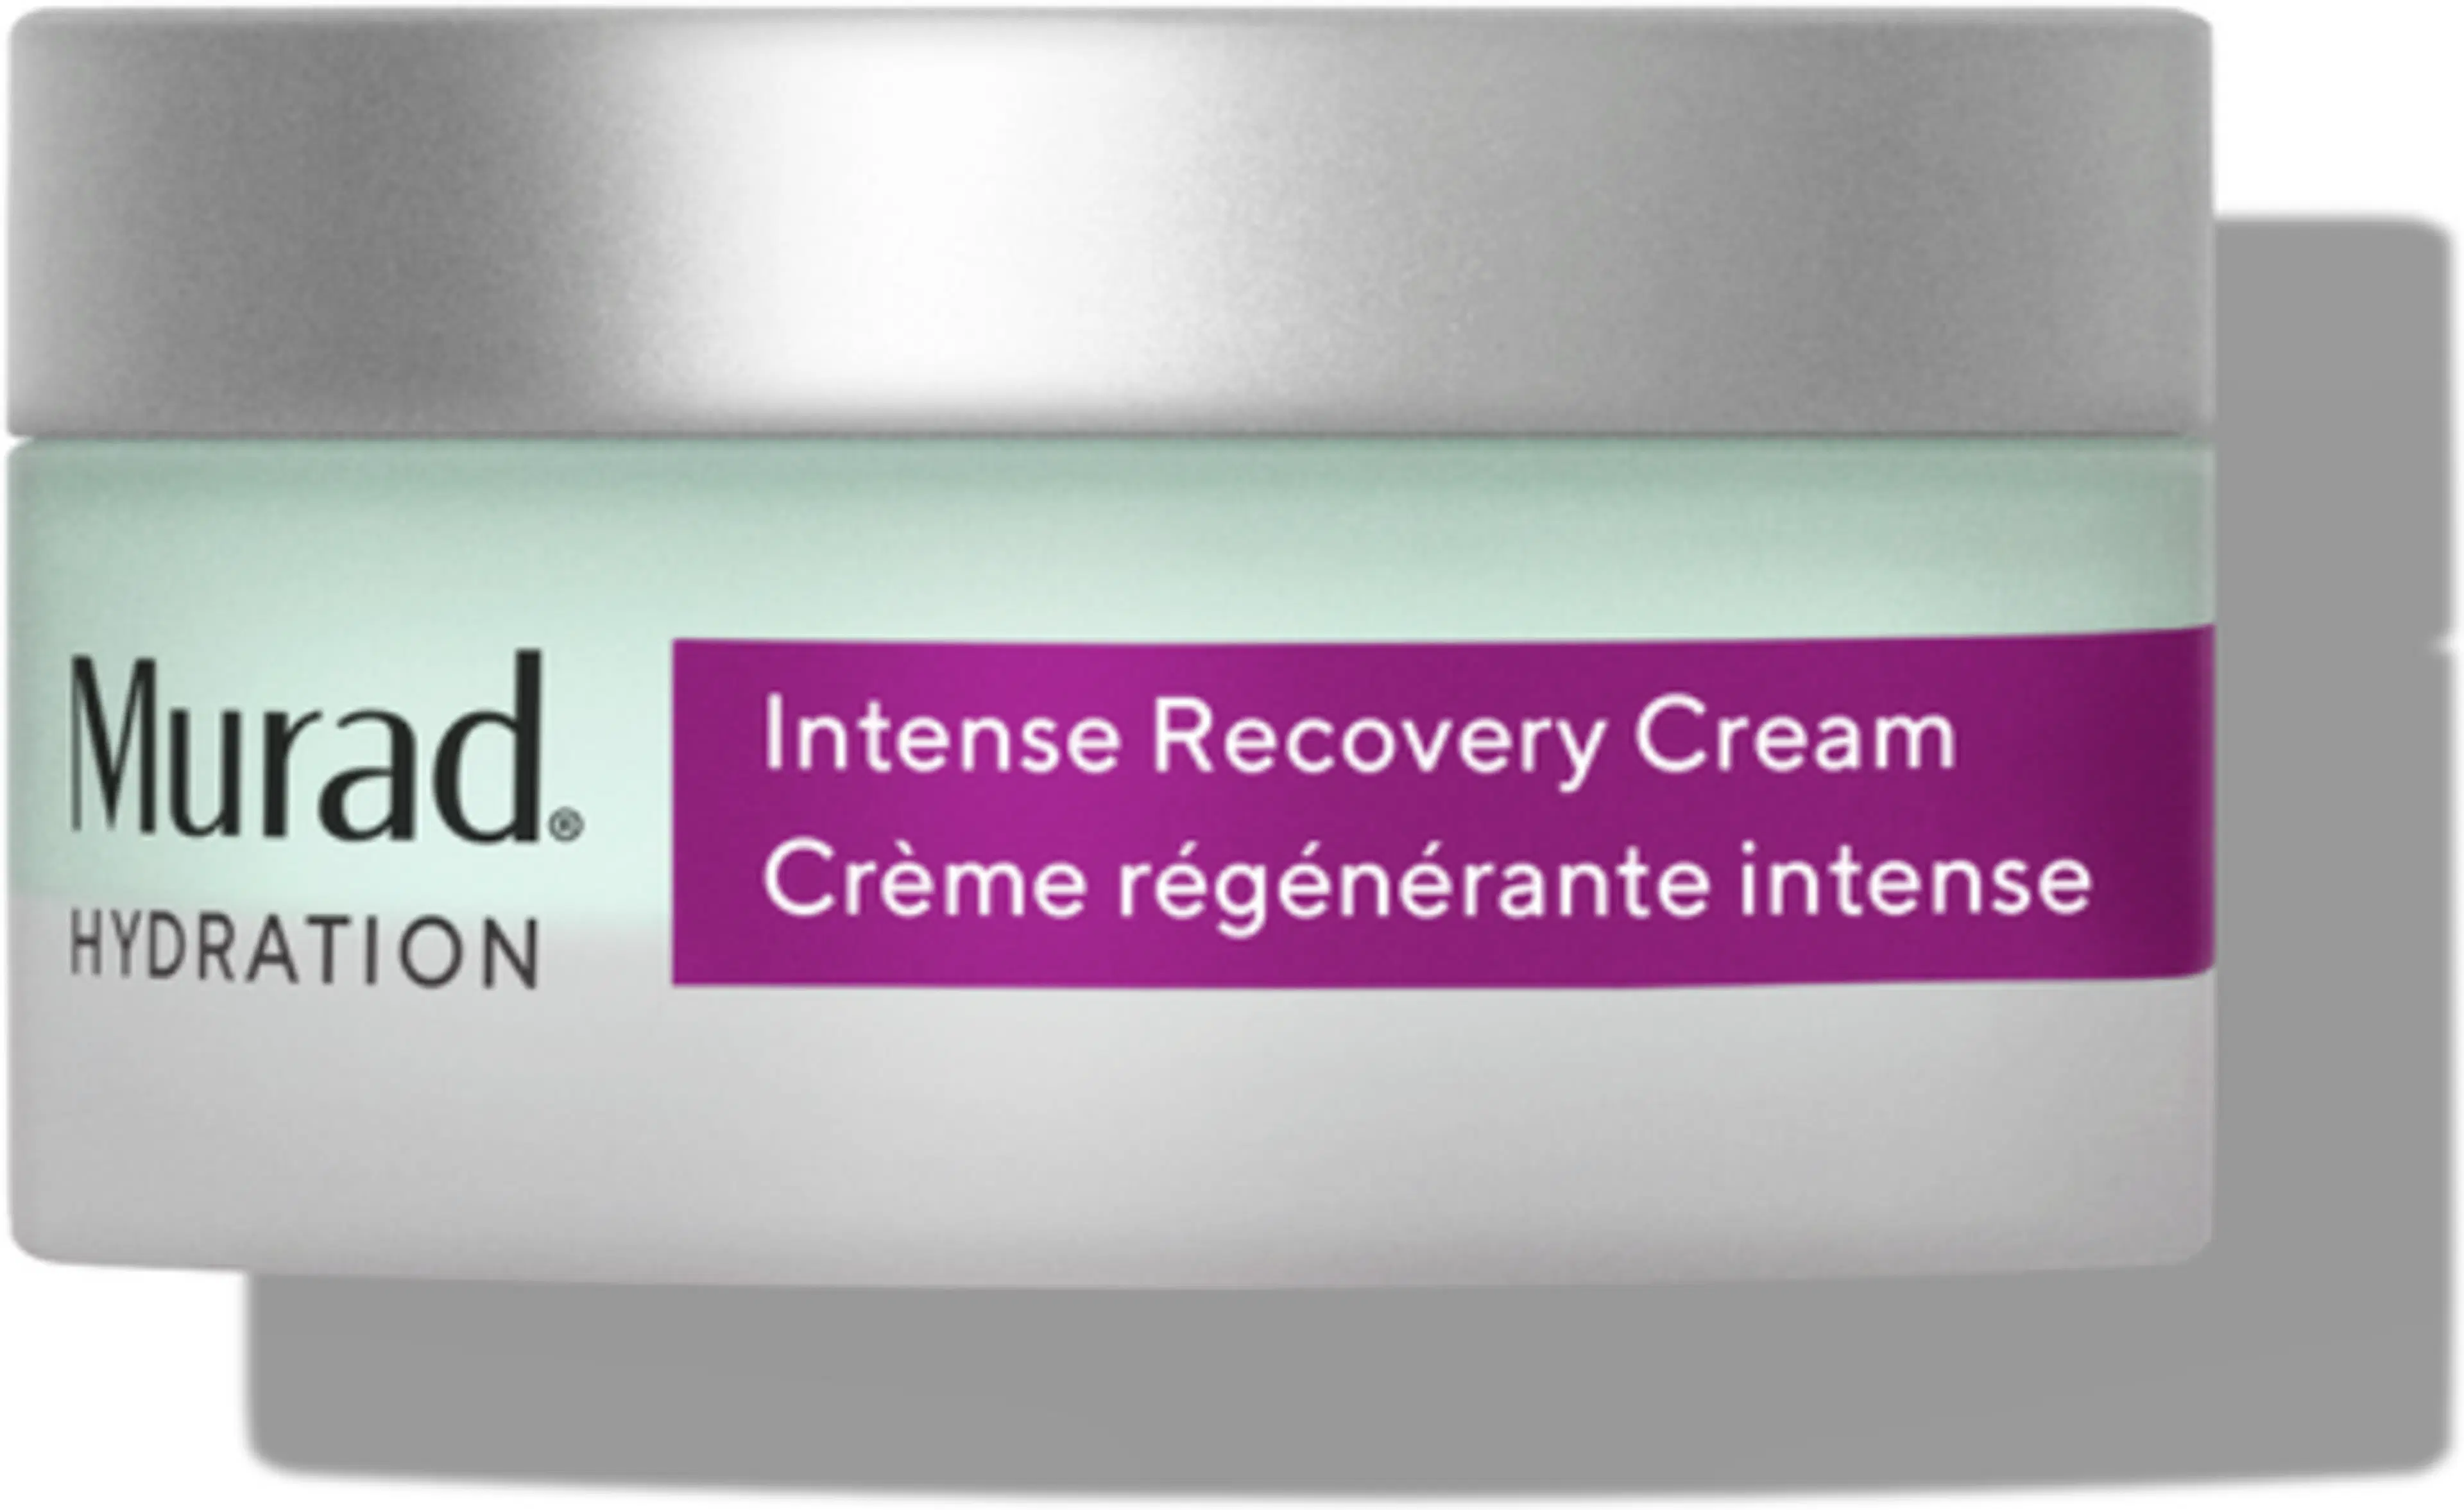 Murad Intense Recovery Cream voide 50 ml